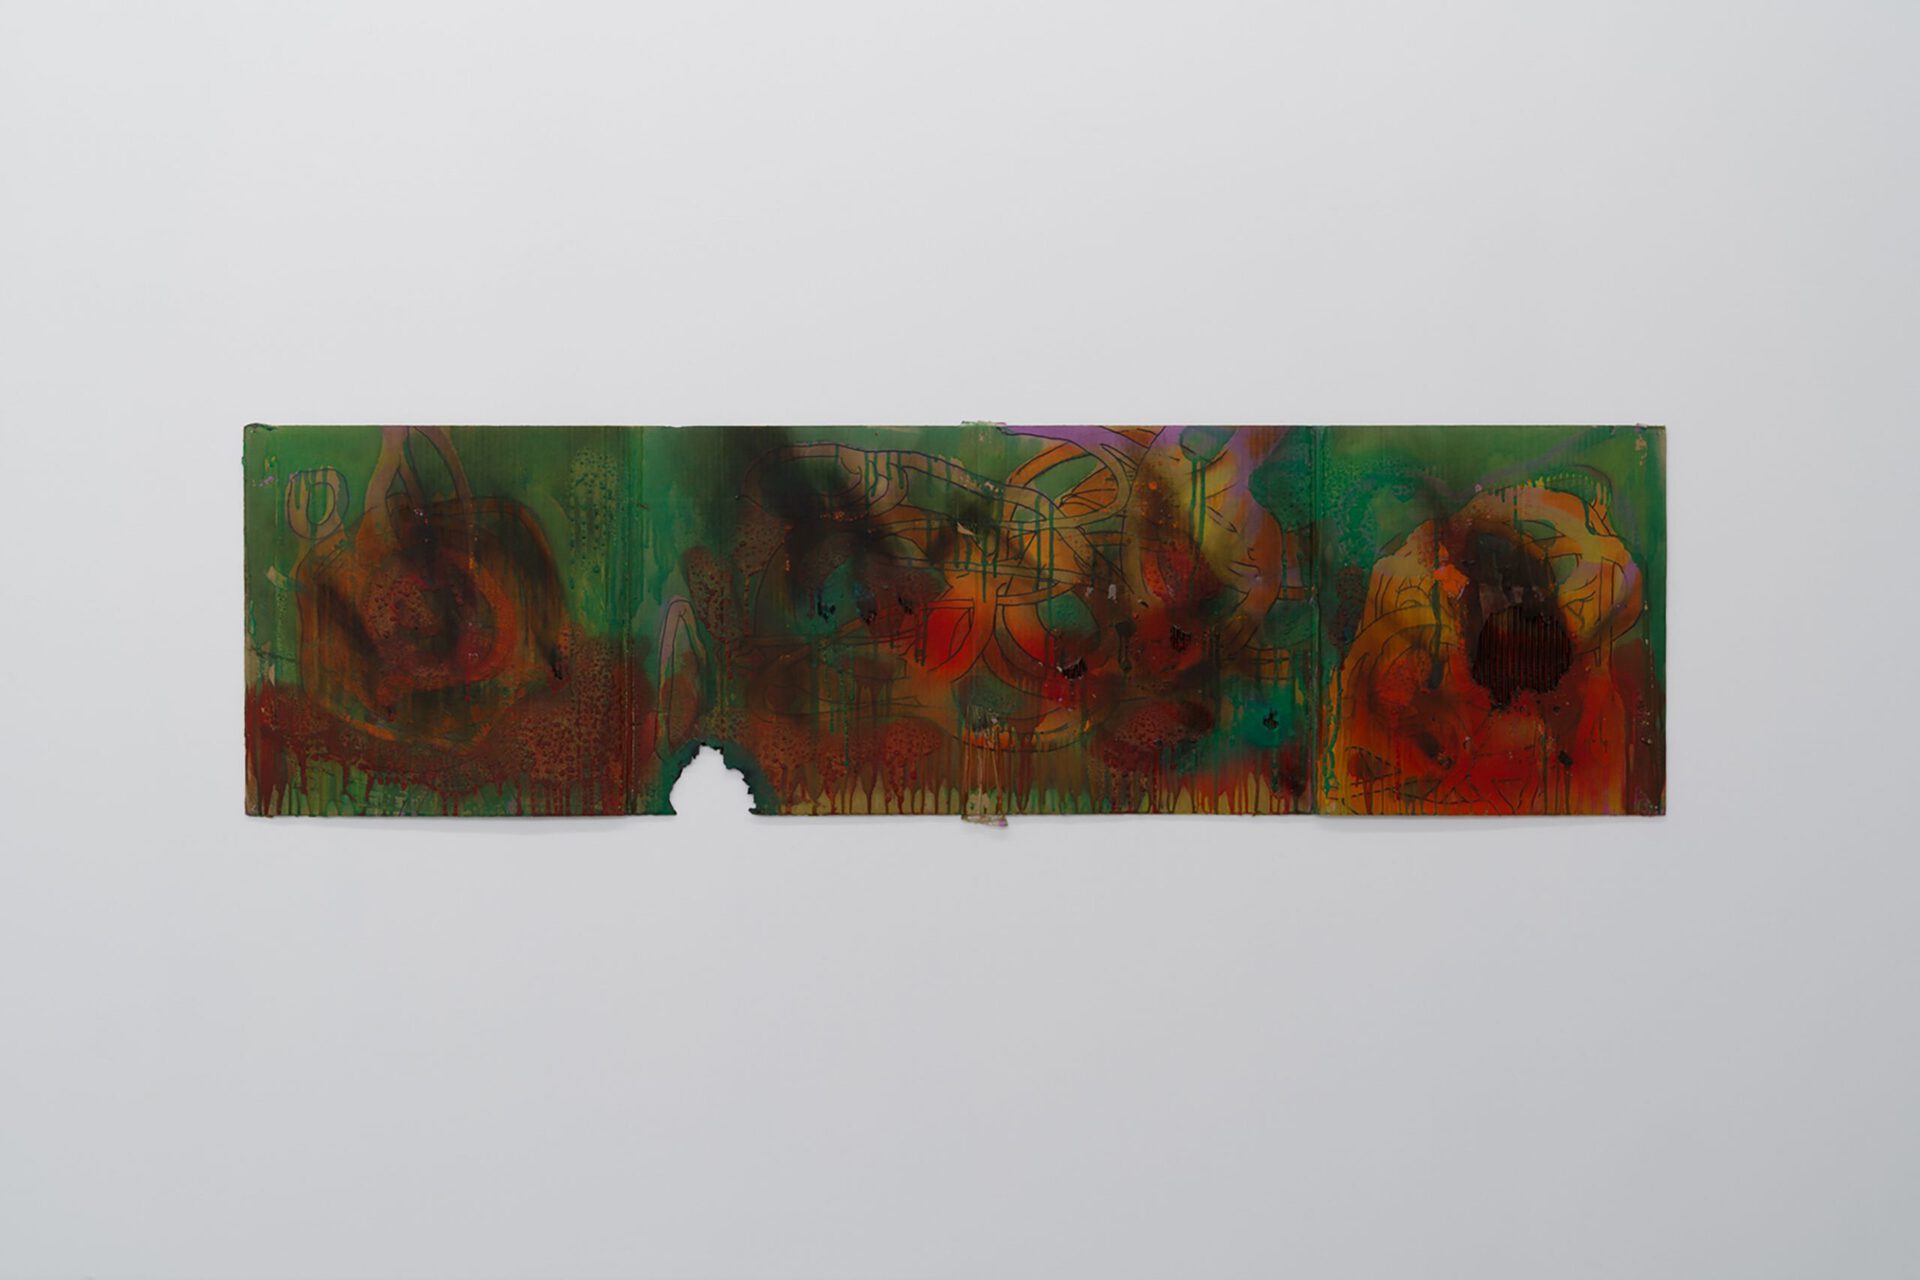 Arthur Golyakov, ‘Aquarium’, 2011-2012, corrugated board, enamel, spray paint, solvent, marker, 149 x 41 cm